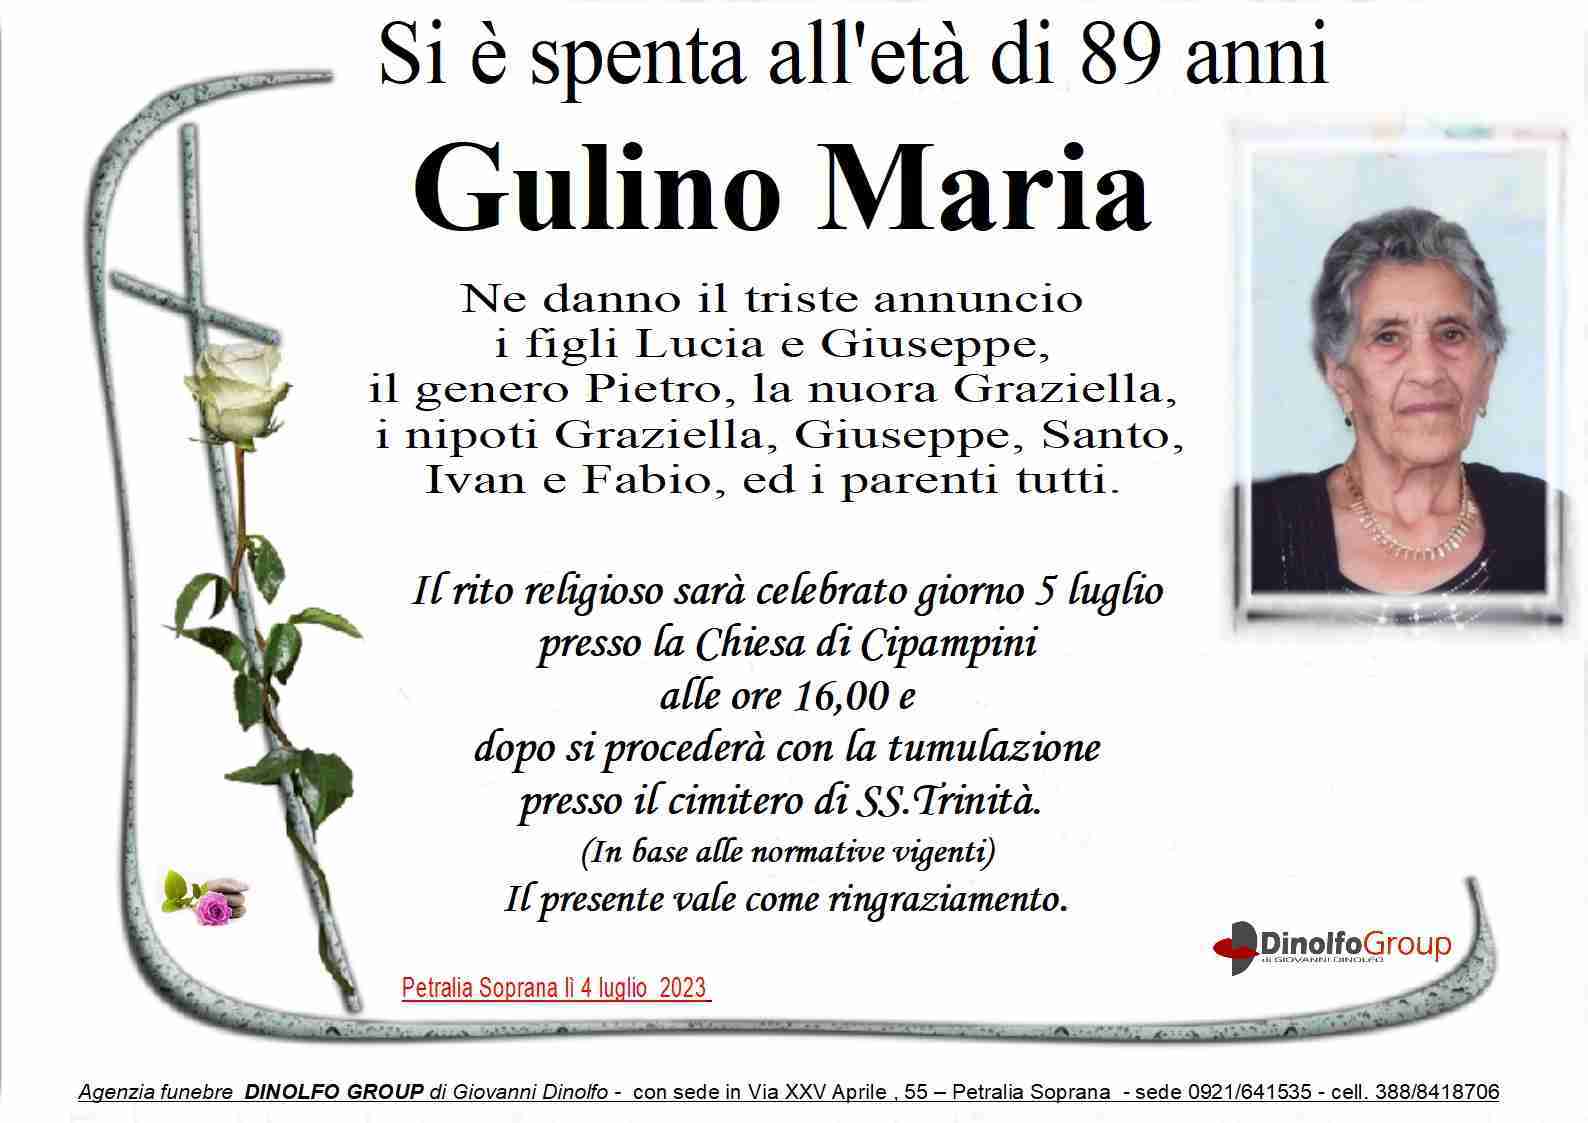 Maria Gulino